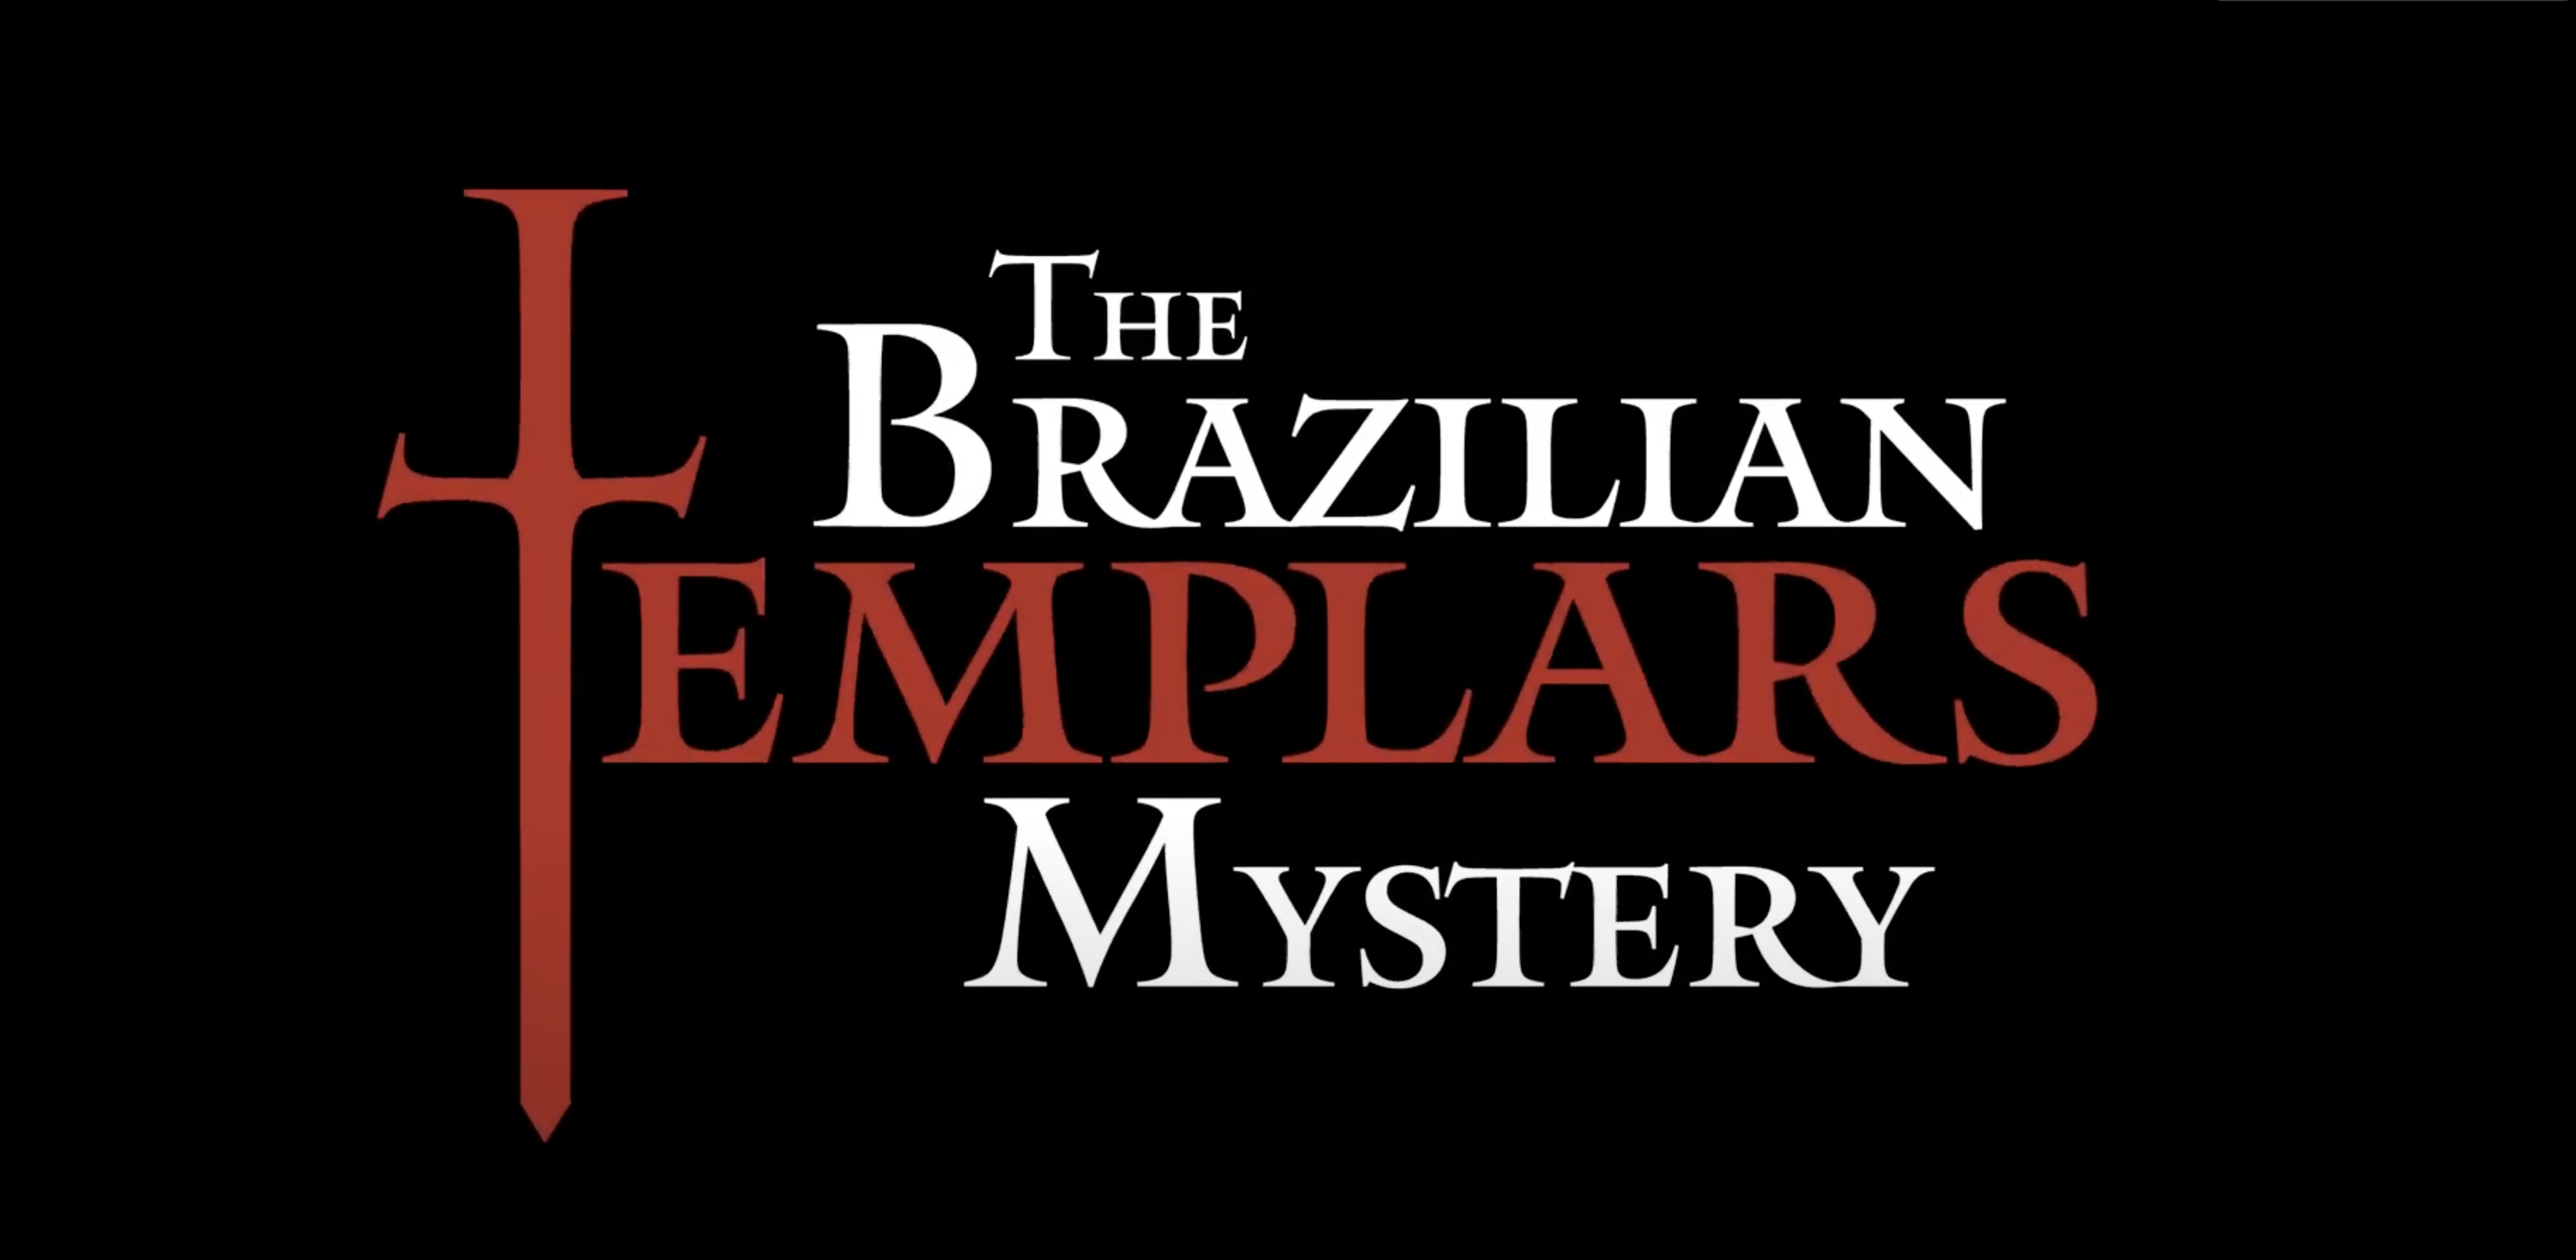 The Brazilian Templars Mystery